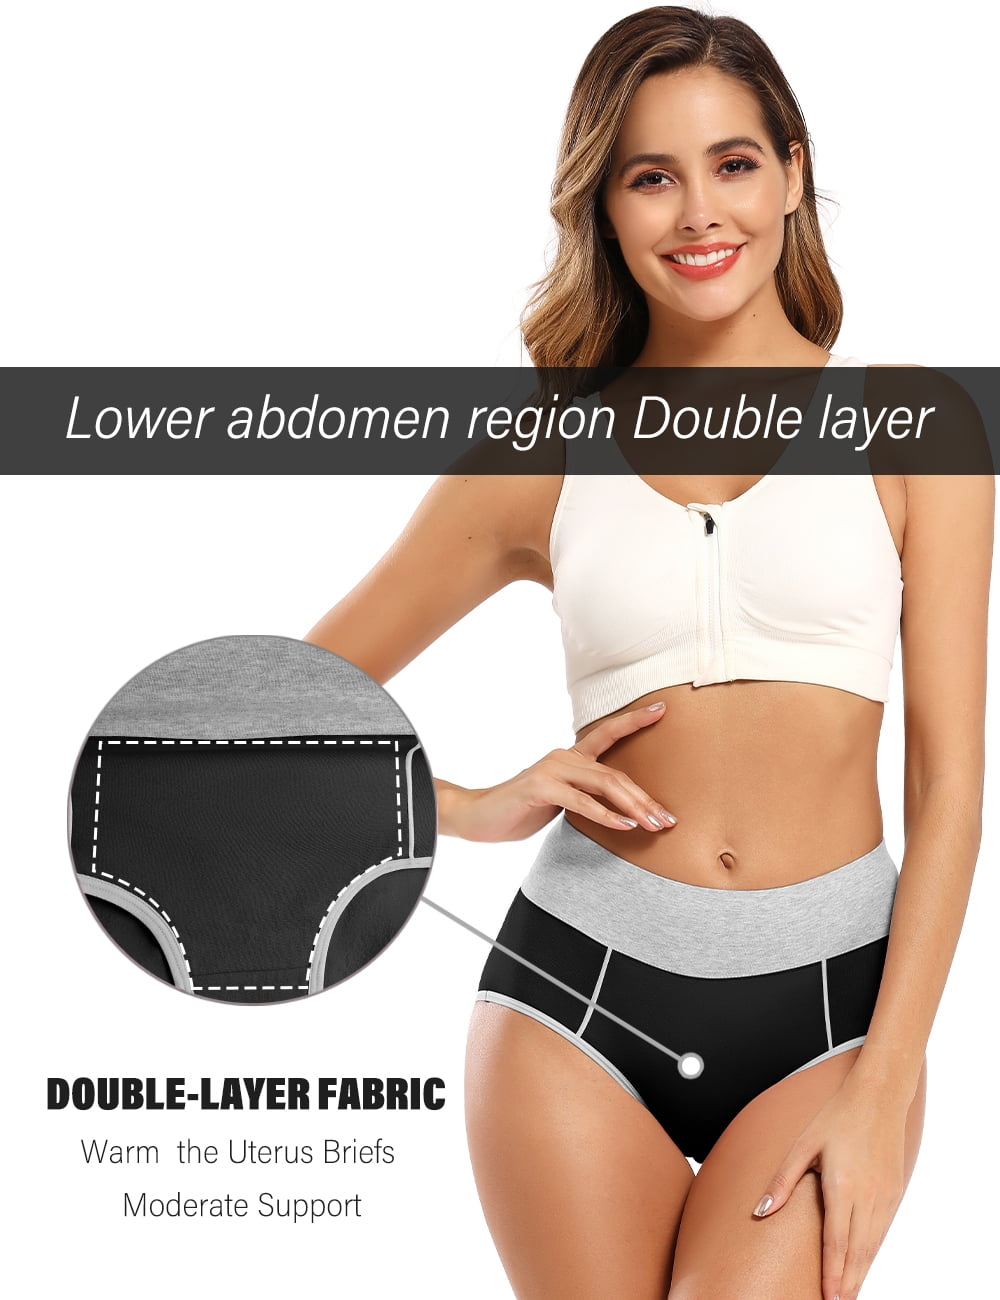 POKARLA Women's Underwear Cotton High Waist Briefs Full Coverage Soft Breathable  Ladies Pantie, Black-5pack, L price in UAE,  UAE